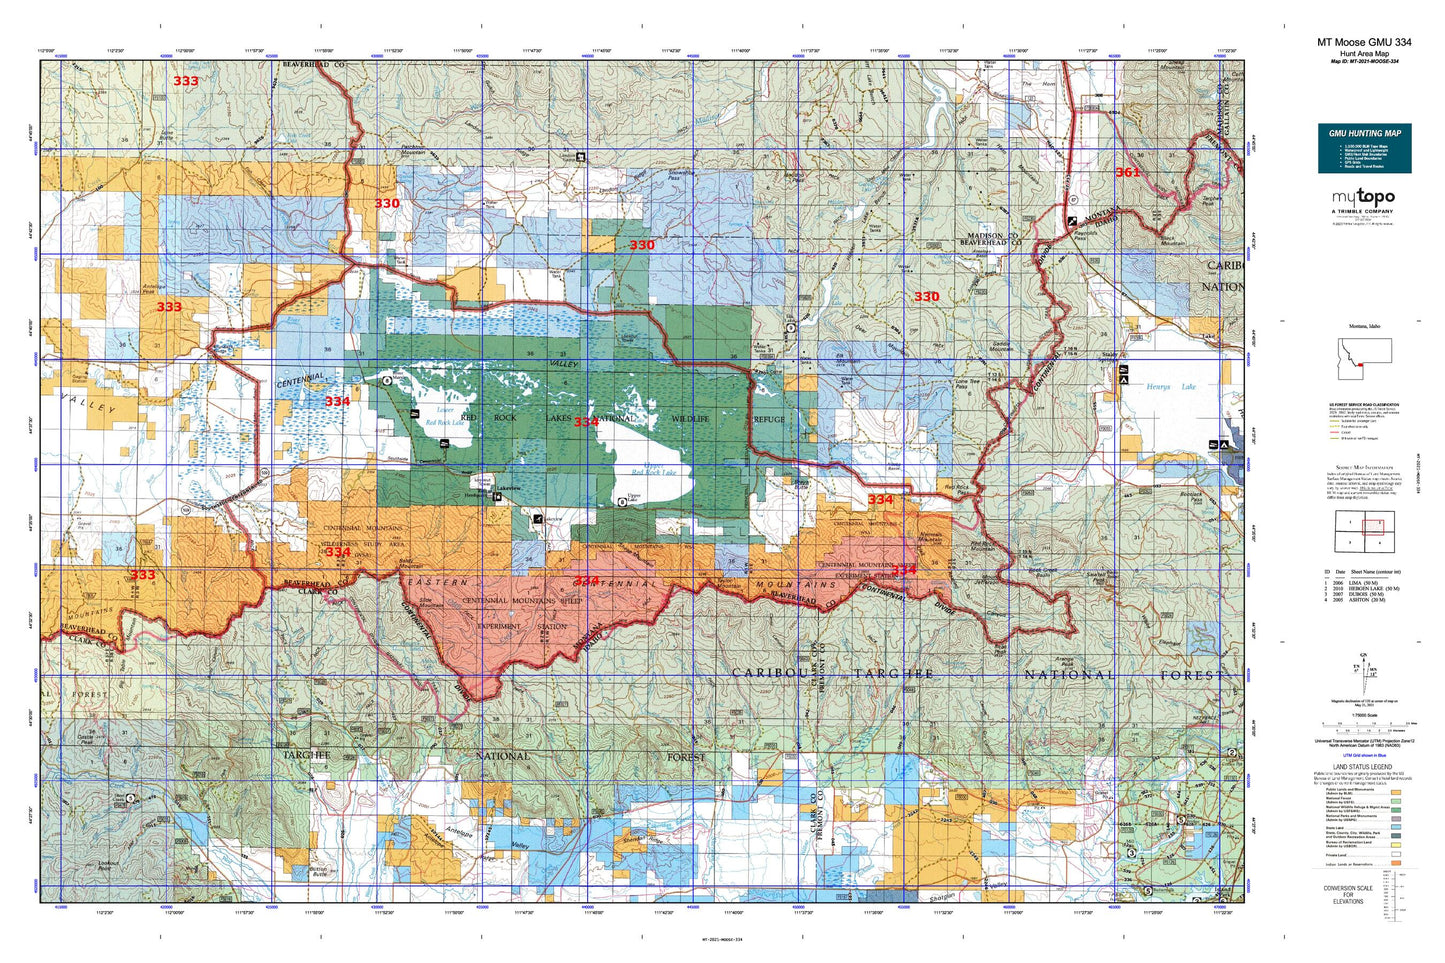 Montana Moose GMU 334 Map Image